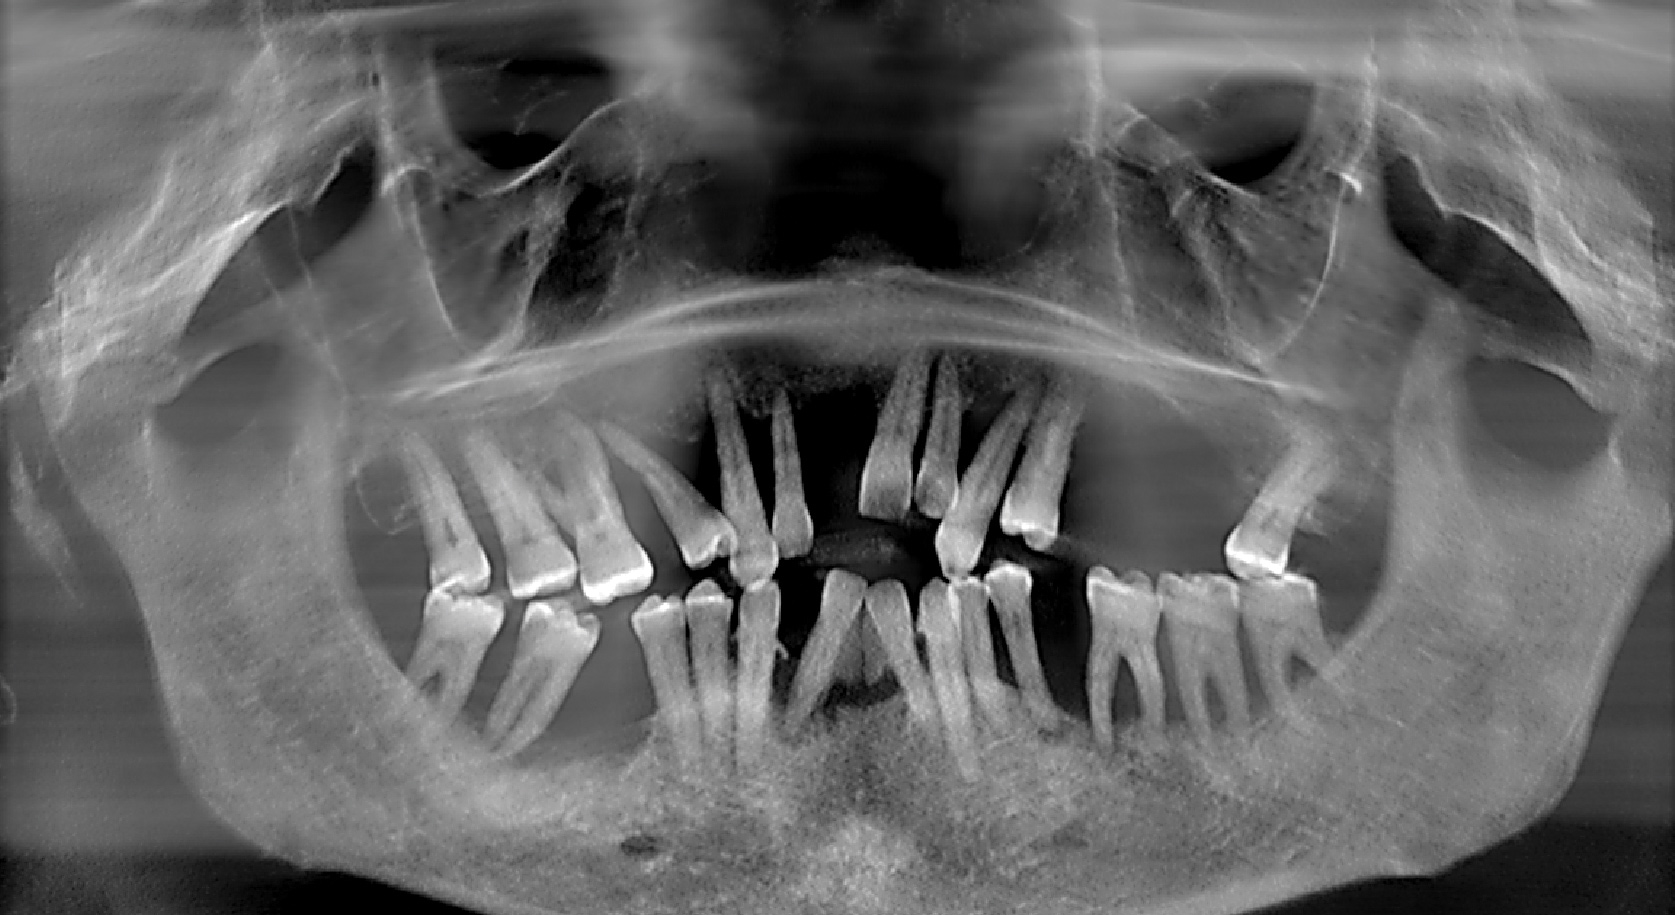 Снимок. Ортопантомограмма пародонтит. Рентген ортопантомограмма зубов. Пародонтит снимок ОПТГ. Ортопантомограмма пародонтит тяжелой степени.